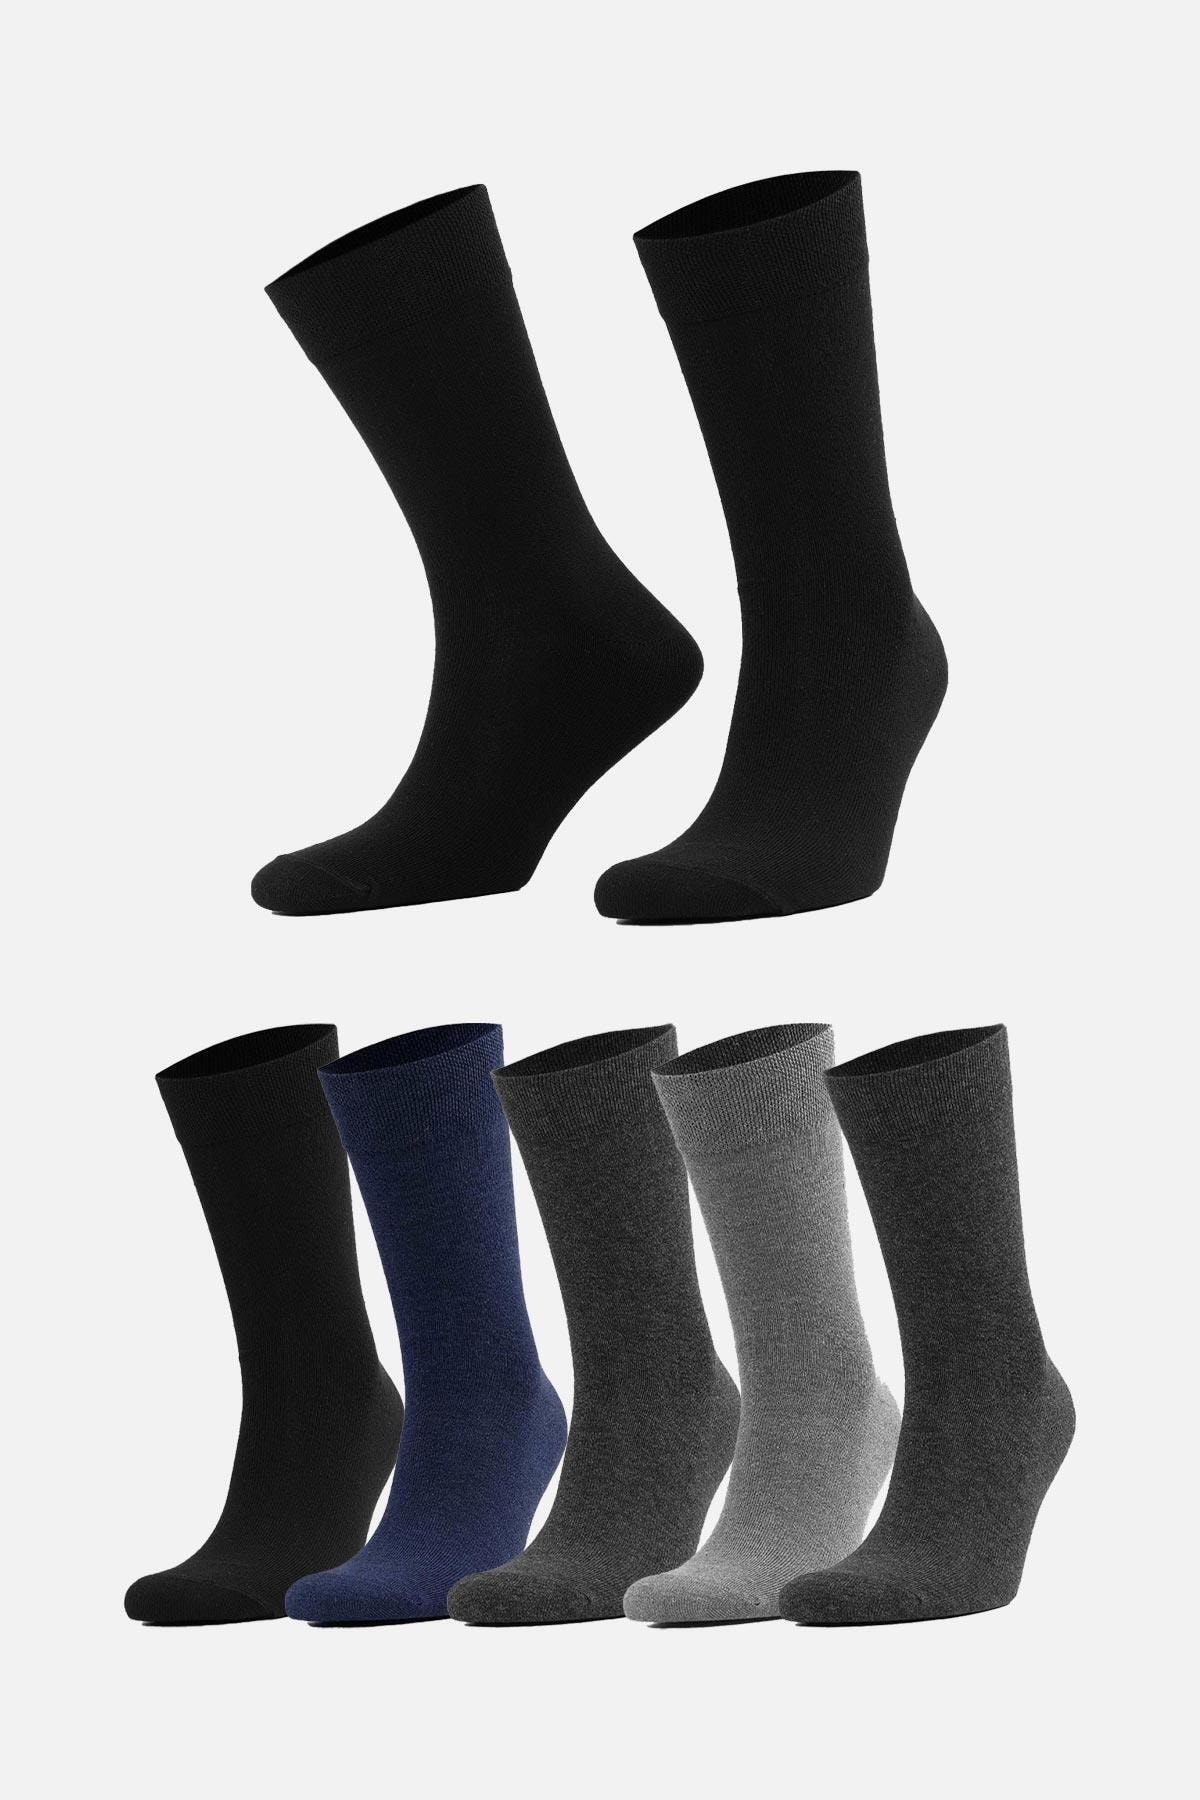 SOCKSMAX Unisex Pamuklu Recycle 5 Çift Çok Renkli Soket Çorap - Ss-rcy-as